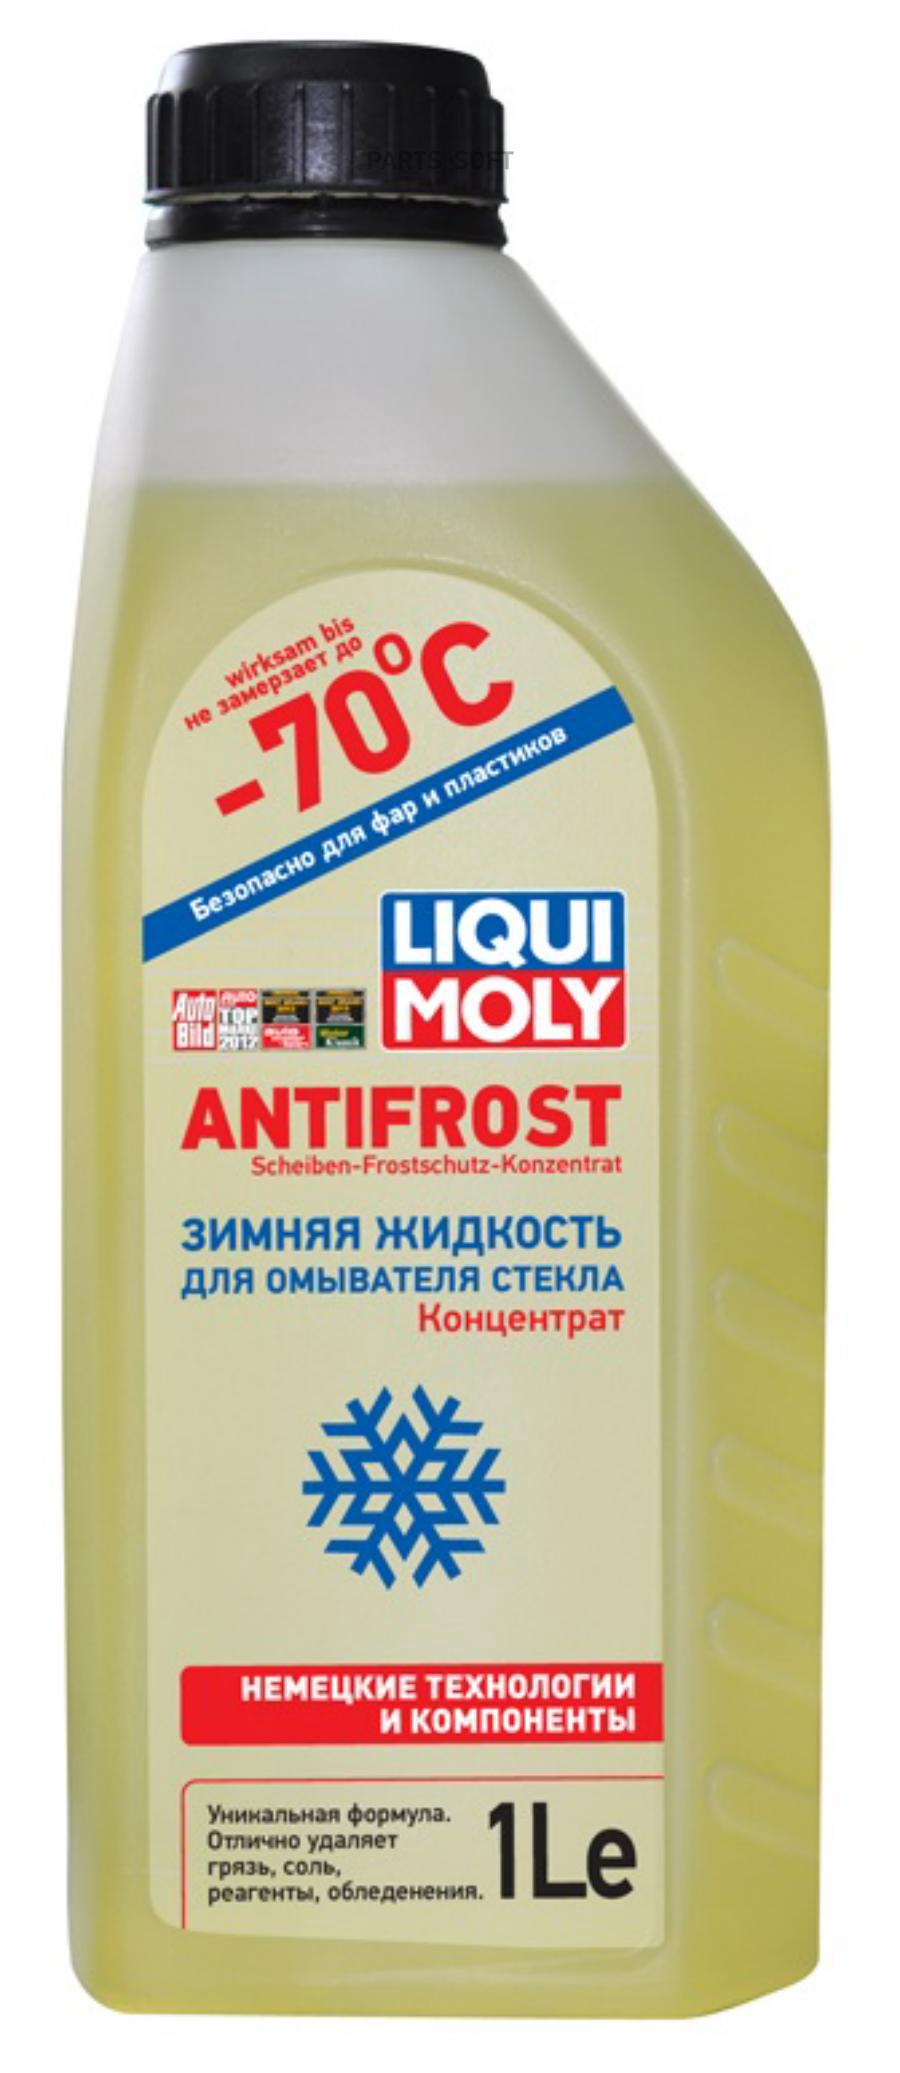 01120 LIQUI MOLY Стеклоомывающая жидкость концентрат ANTIFROST Scheiben-Frostschutz Konzentrat -70С 1л